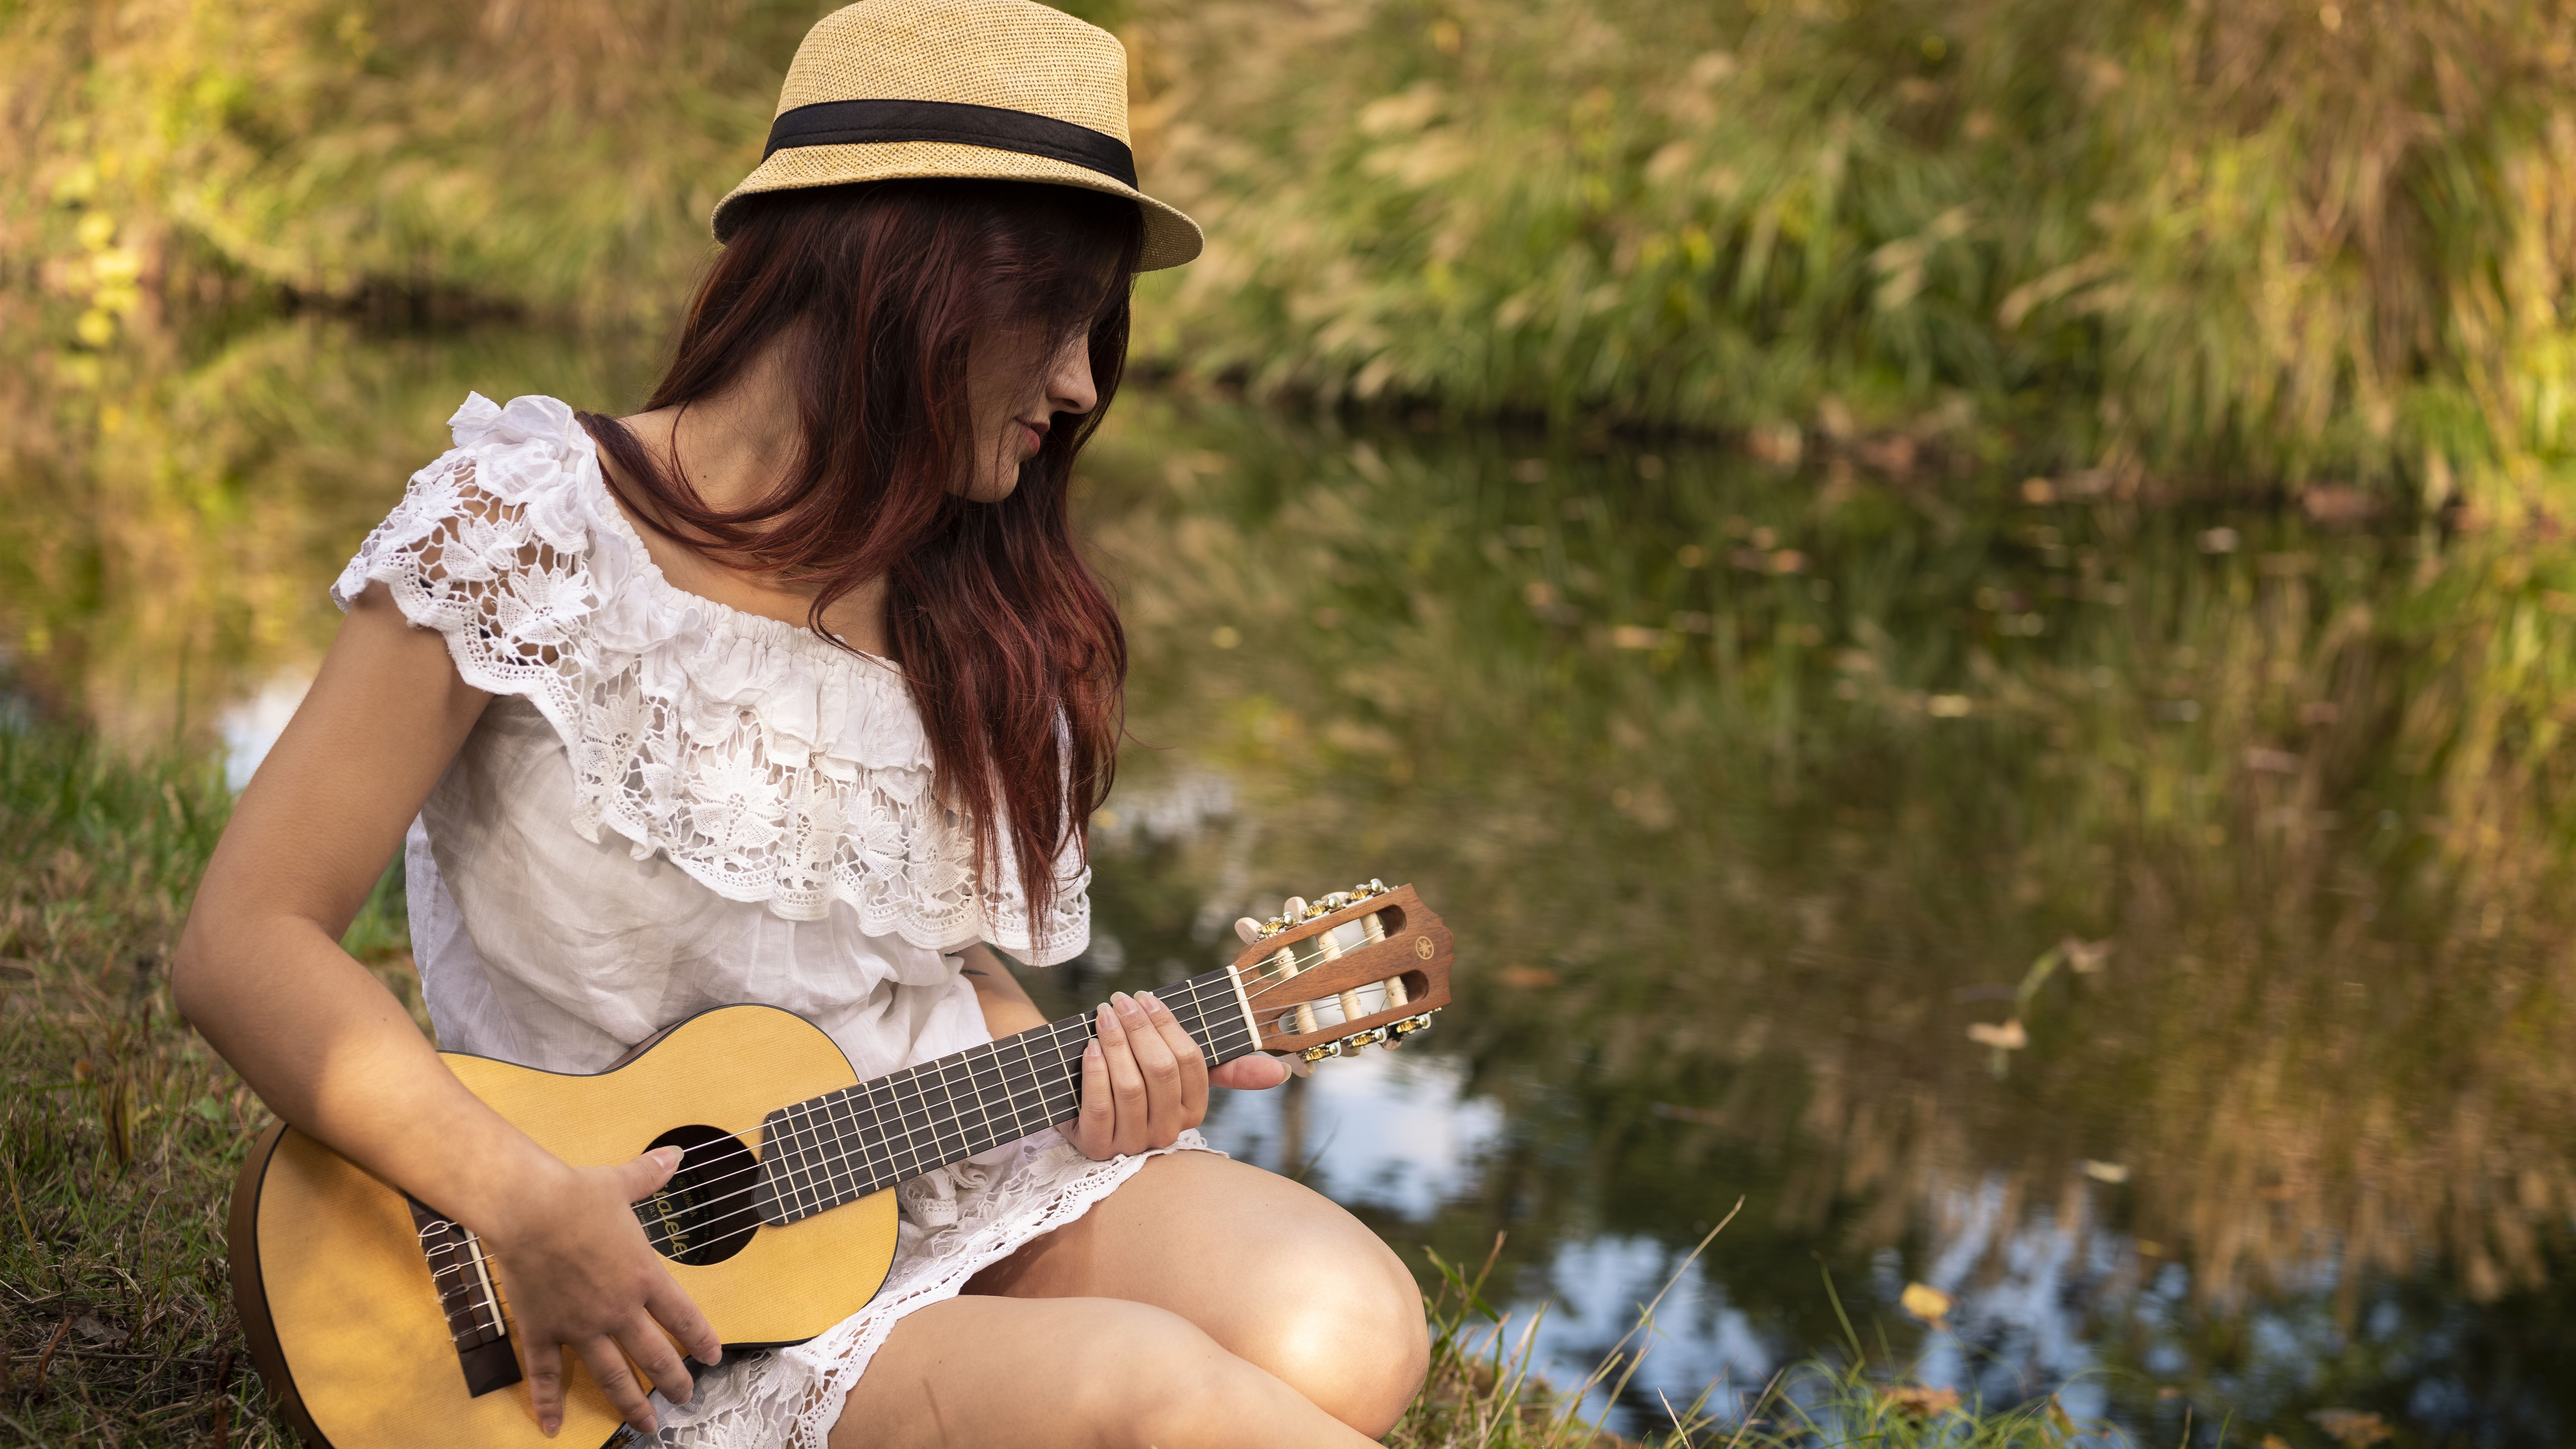 Wallpaper Girl, little guitar, summer 7680x4320 UHD 8K Picture, Image